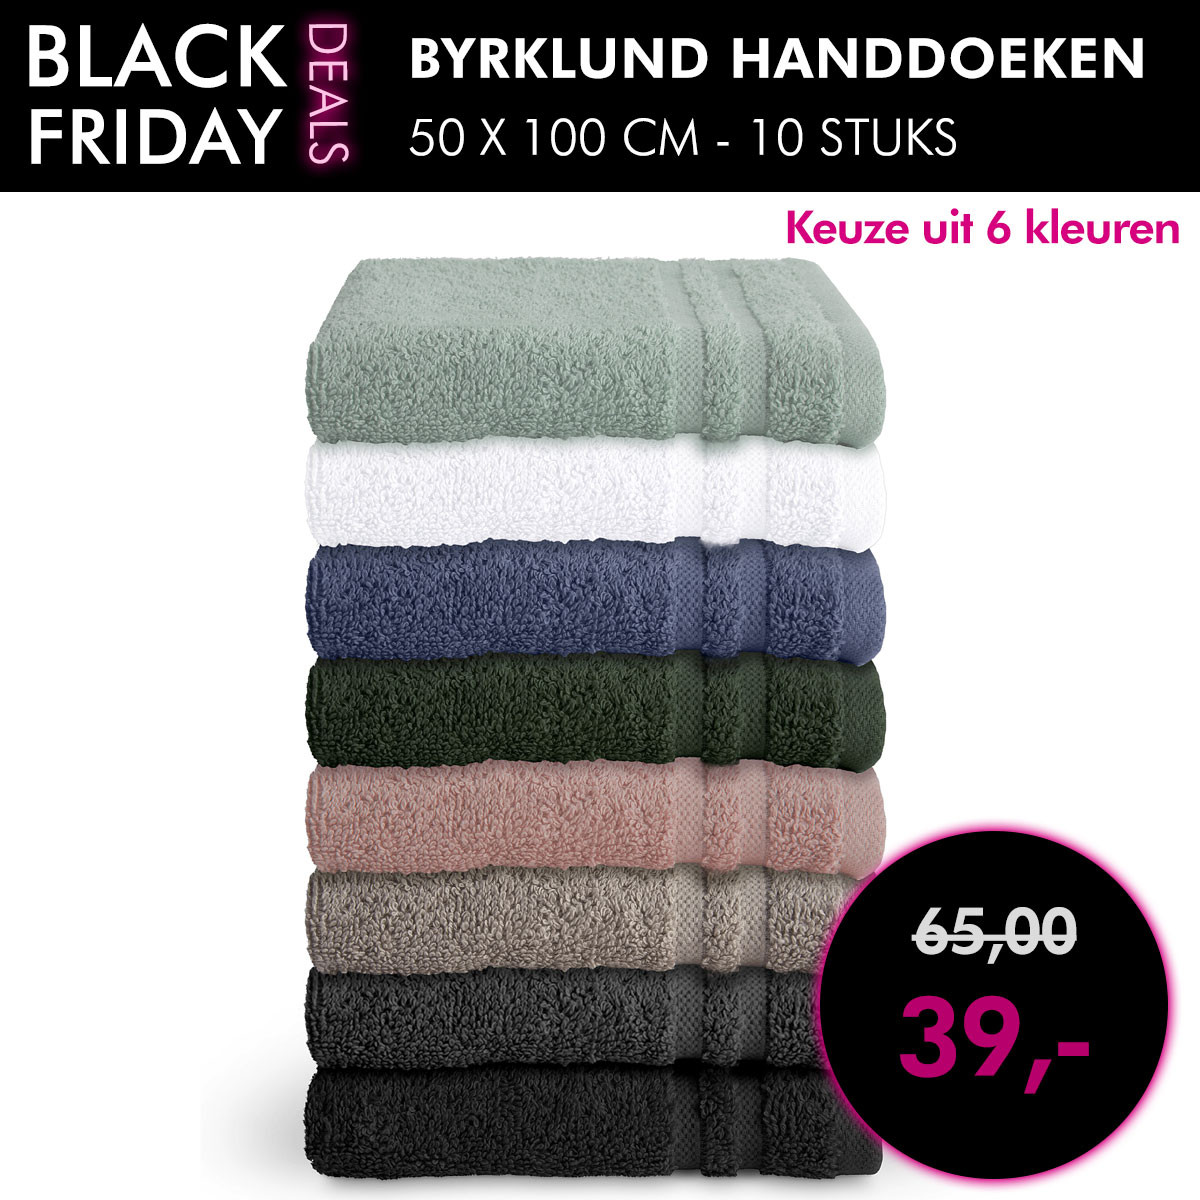 dagaanbieding-byrklund-handdoeken-50x100-10-stuks_1_1